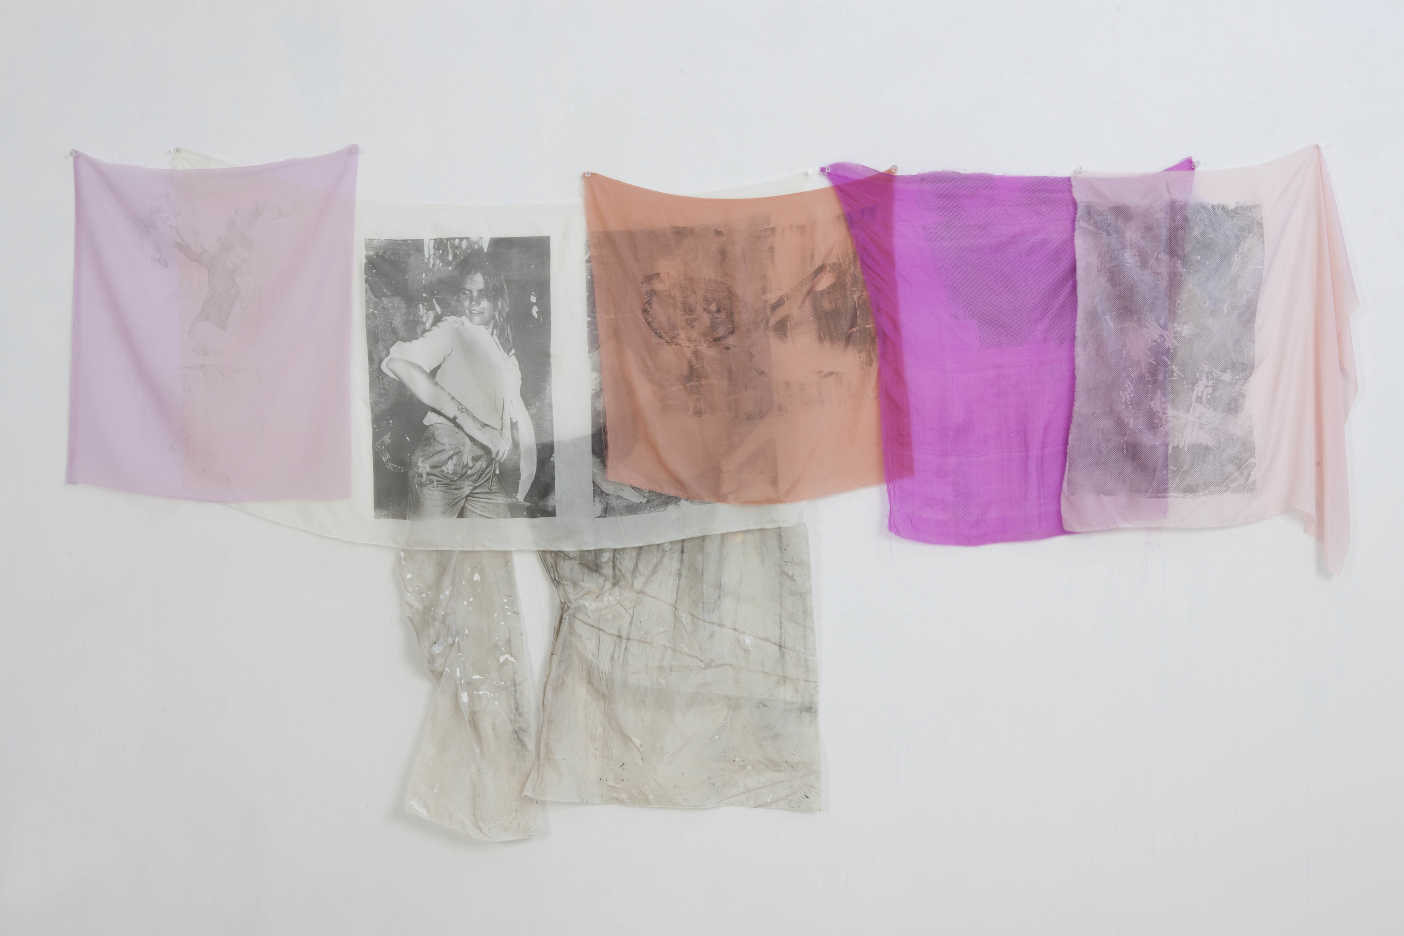 Prints on fabric, Mariel Hemingway, Jane Fonda